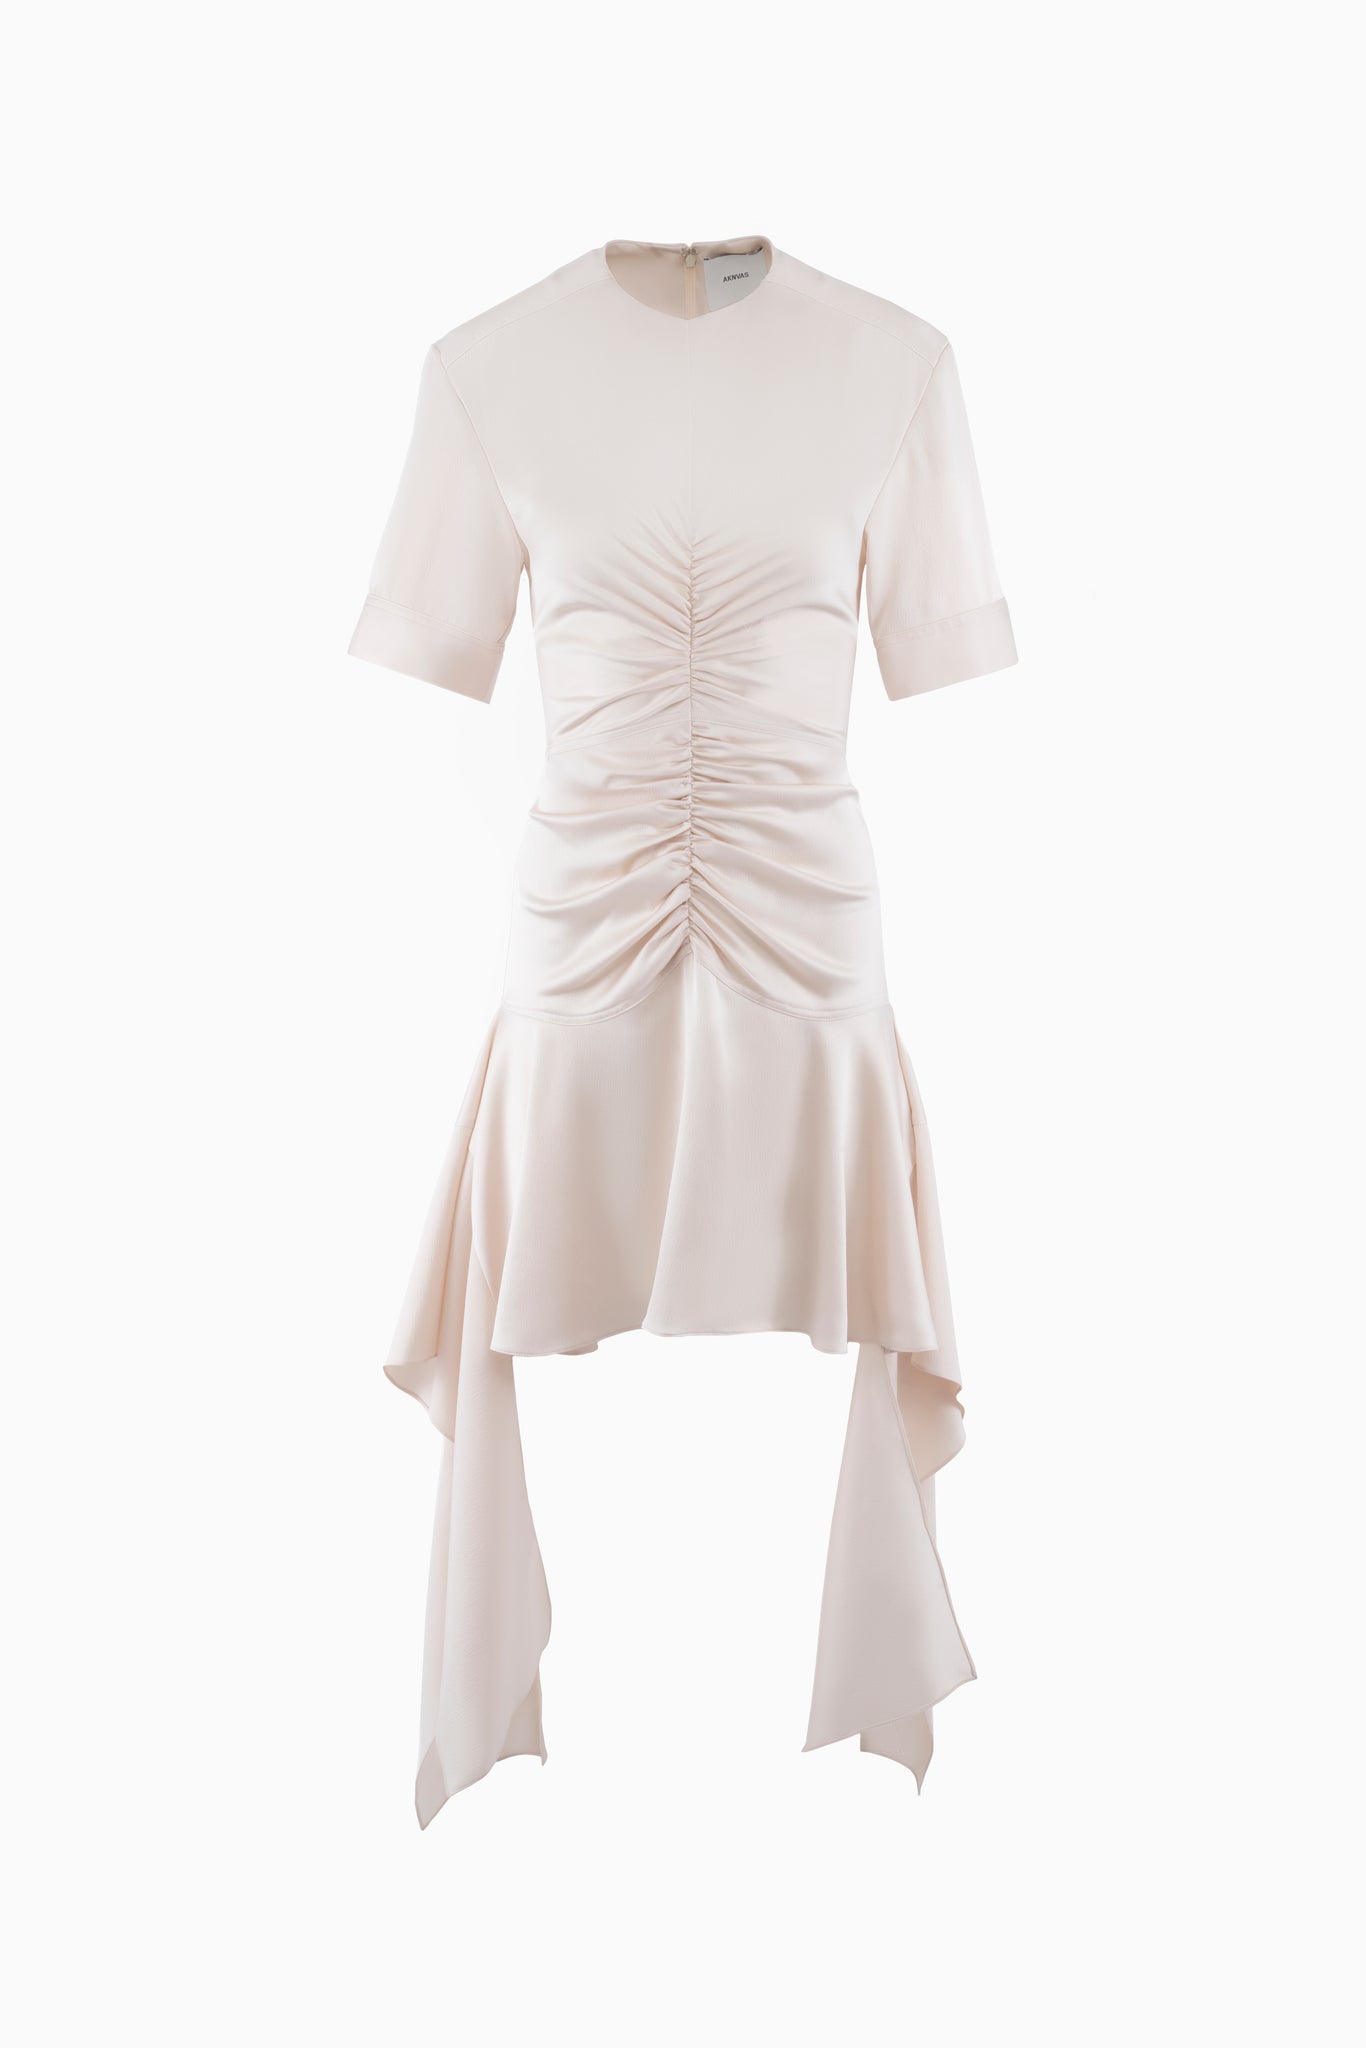 WHITNEY SHORT DRESS